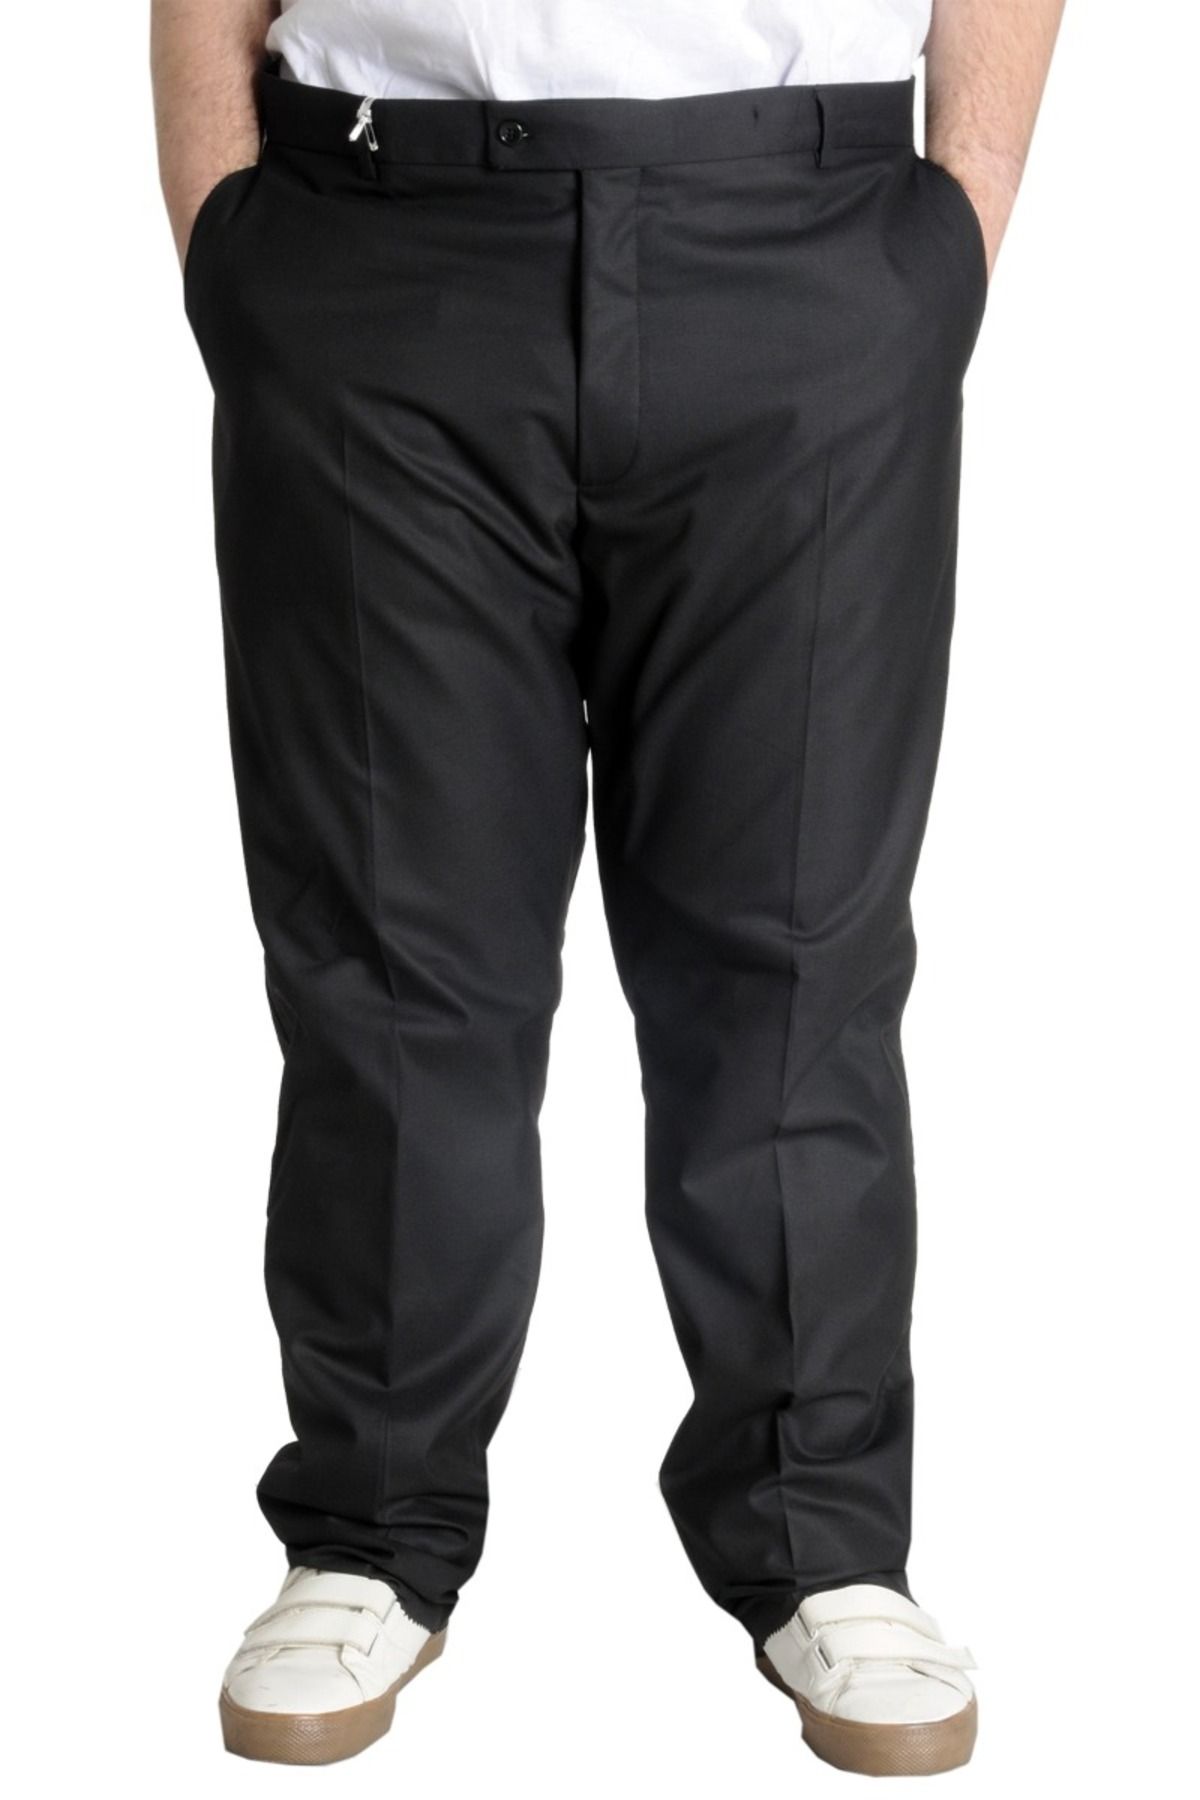 Modexl Mode Xl Buyuk Beden Erkek Kumaş Pantolon Superior 21024 Siyah